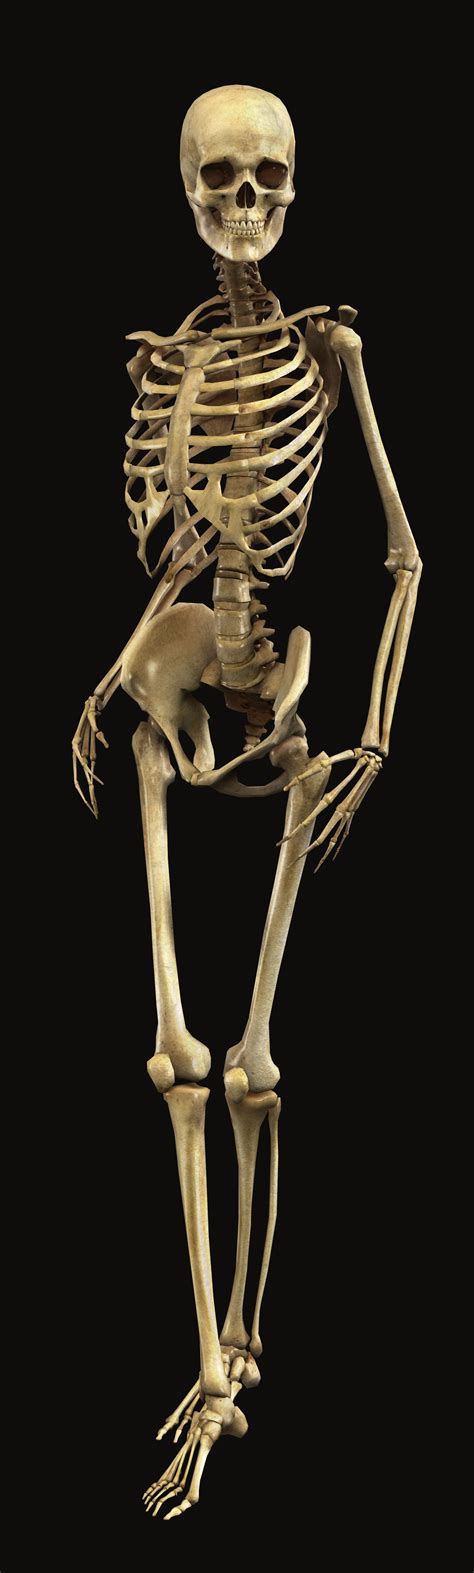 Human Skeleton Bryan Brandenburg Official